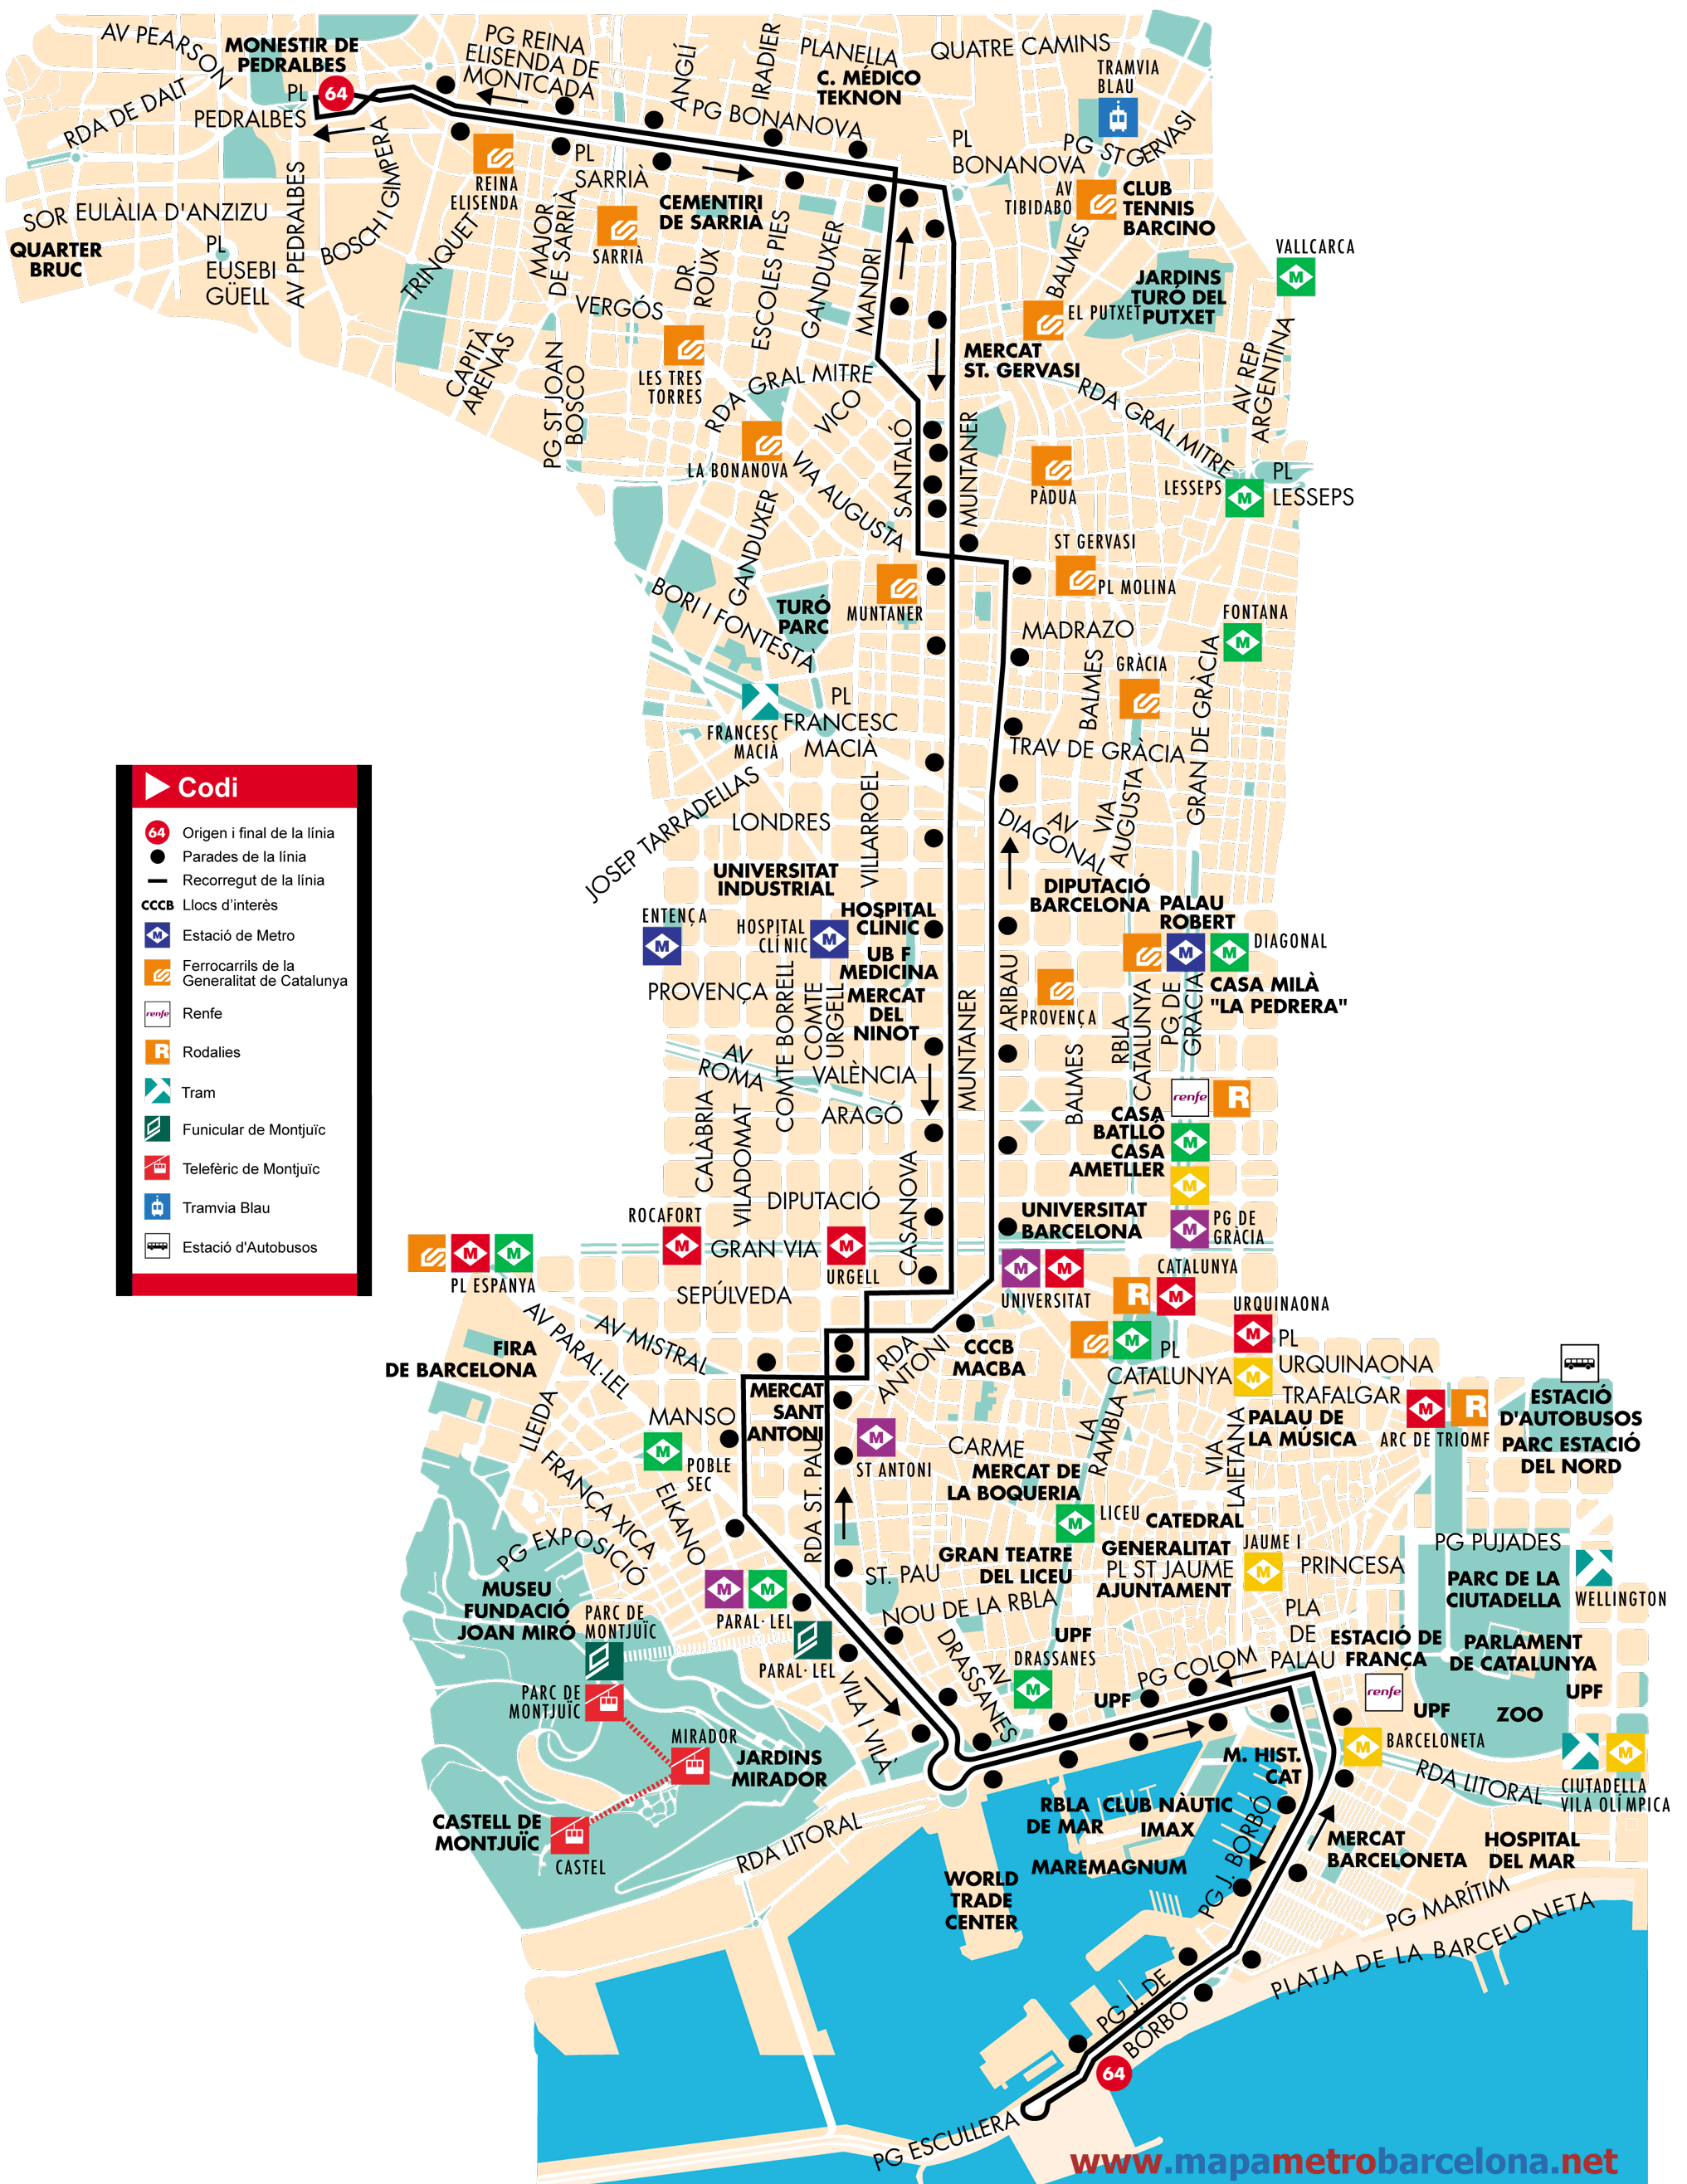 Barcelona bus map line 64